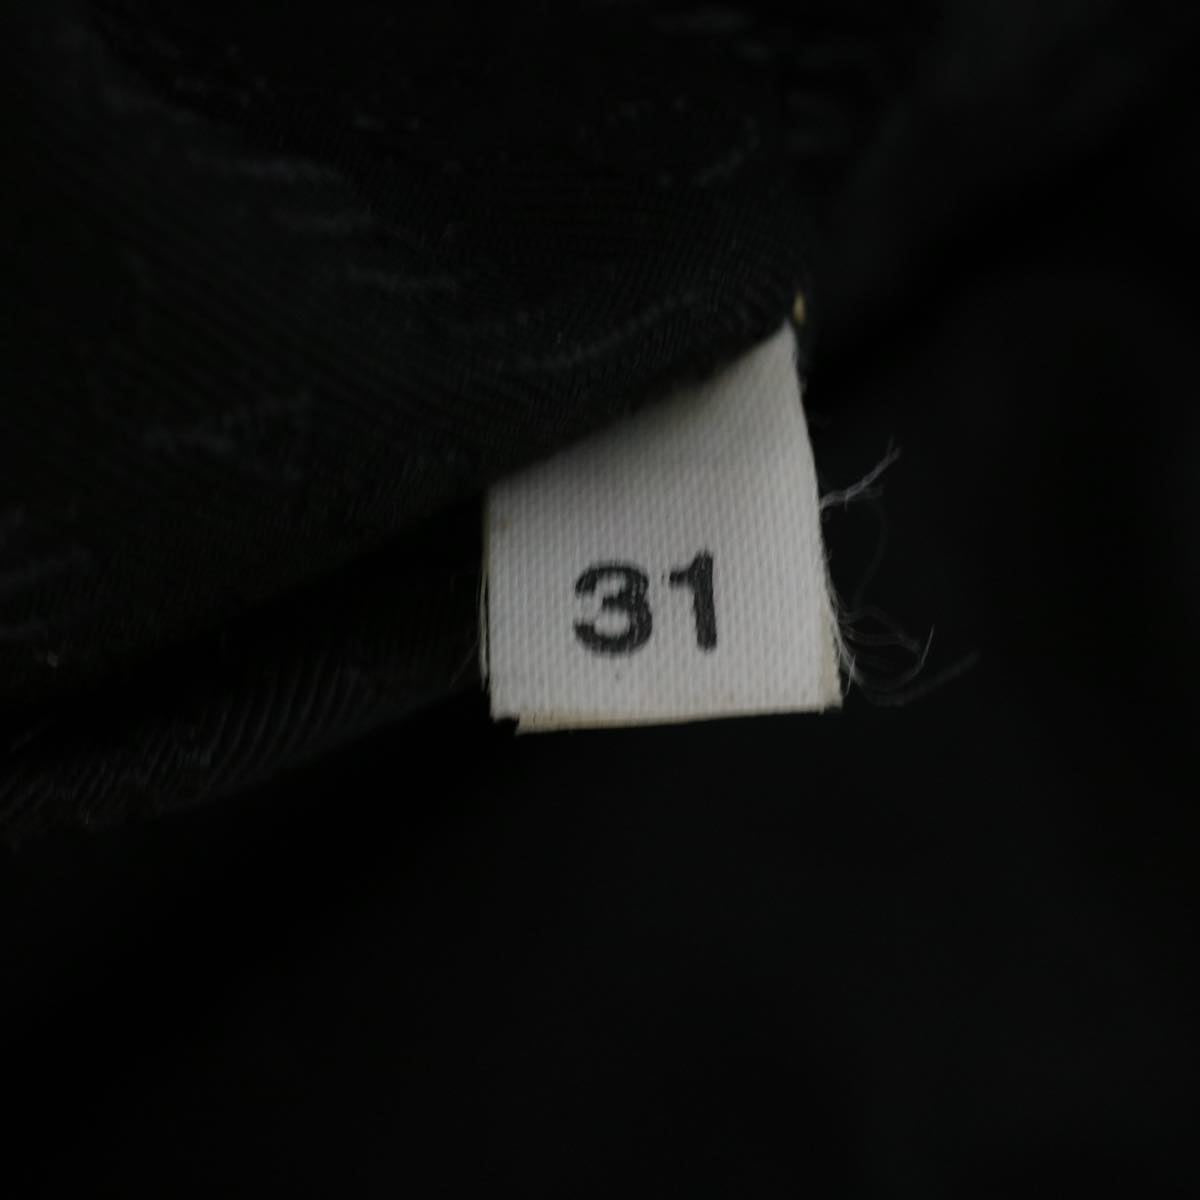 PRADA Tote Bag Nylon Leather Black Auth 41323